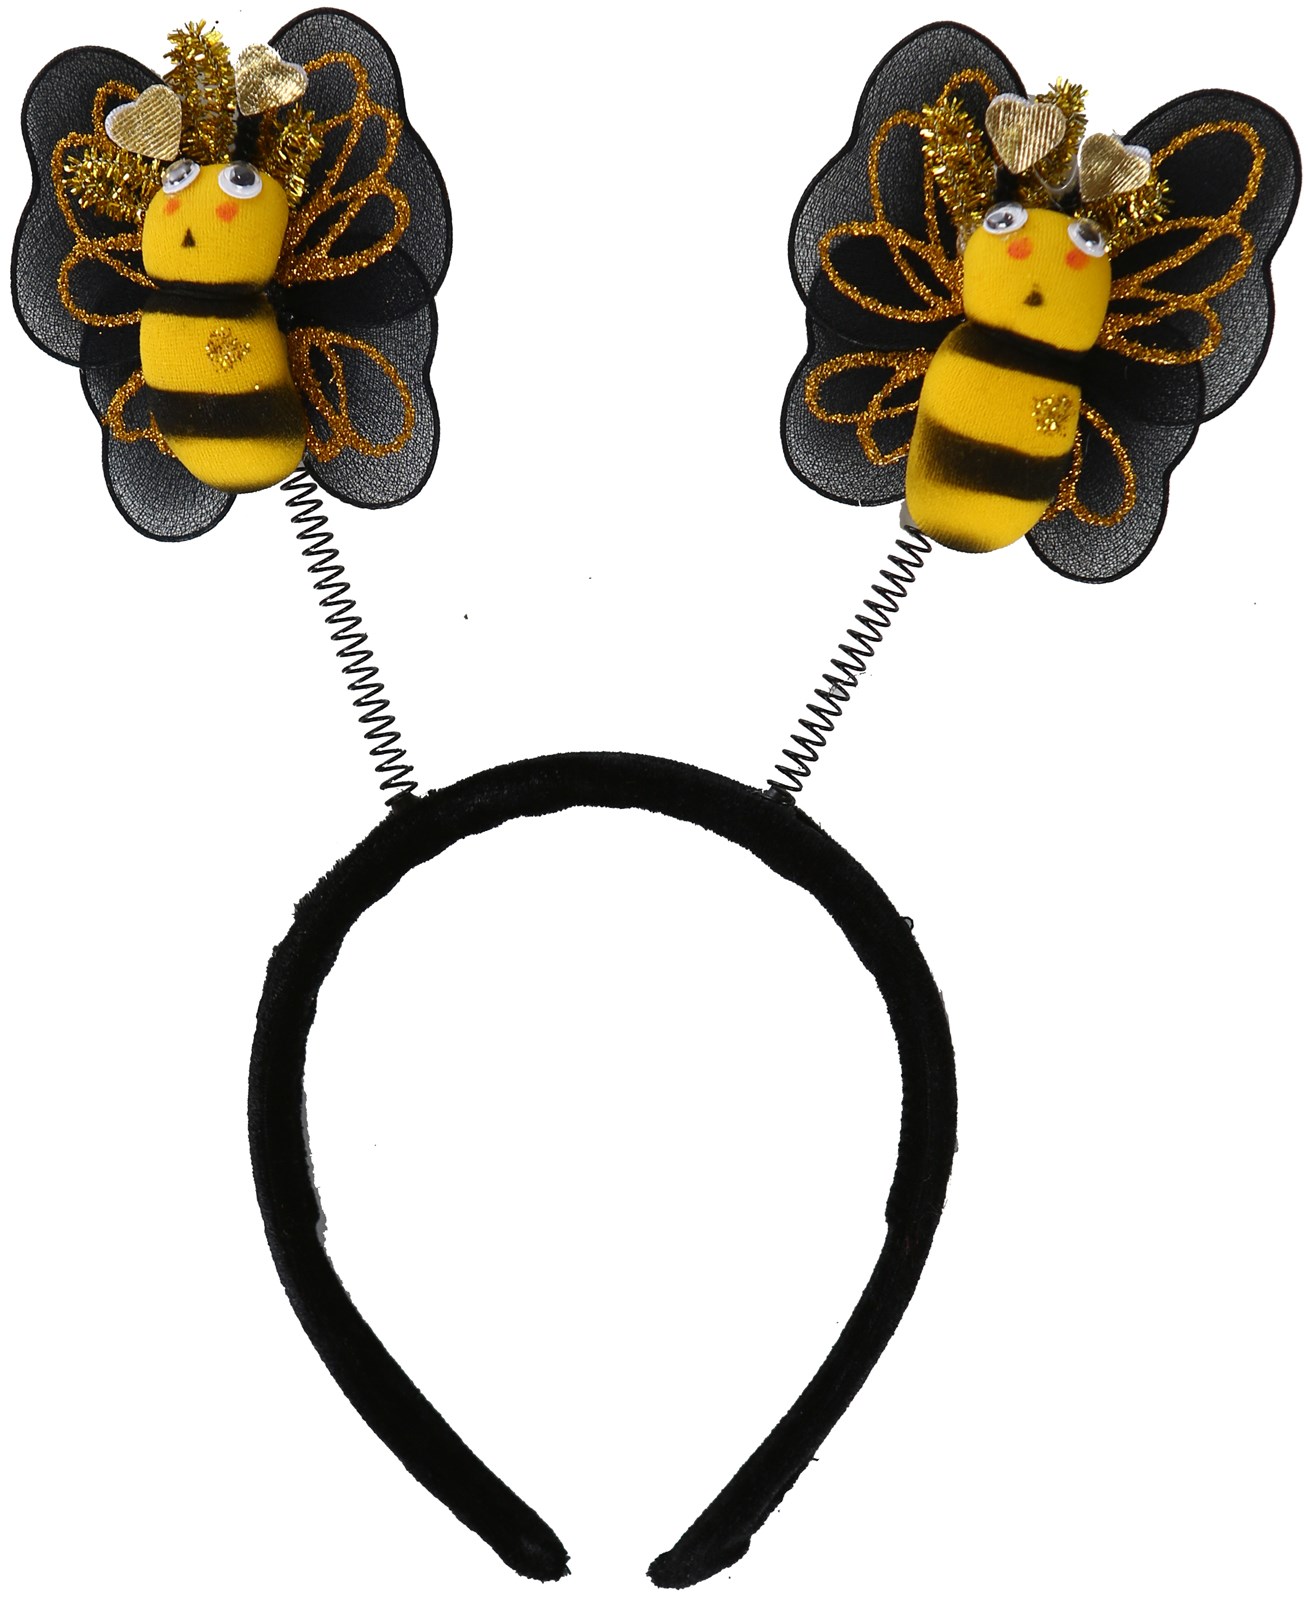 Bumble Bee Child Antenna